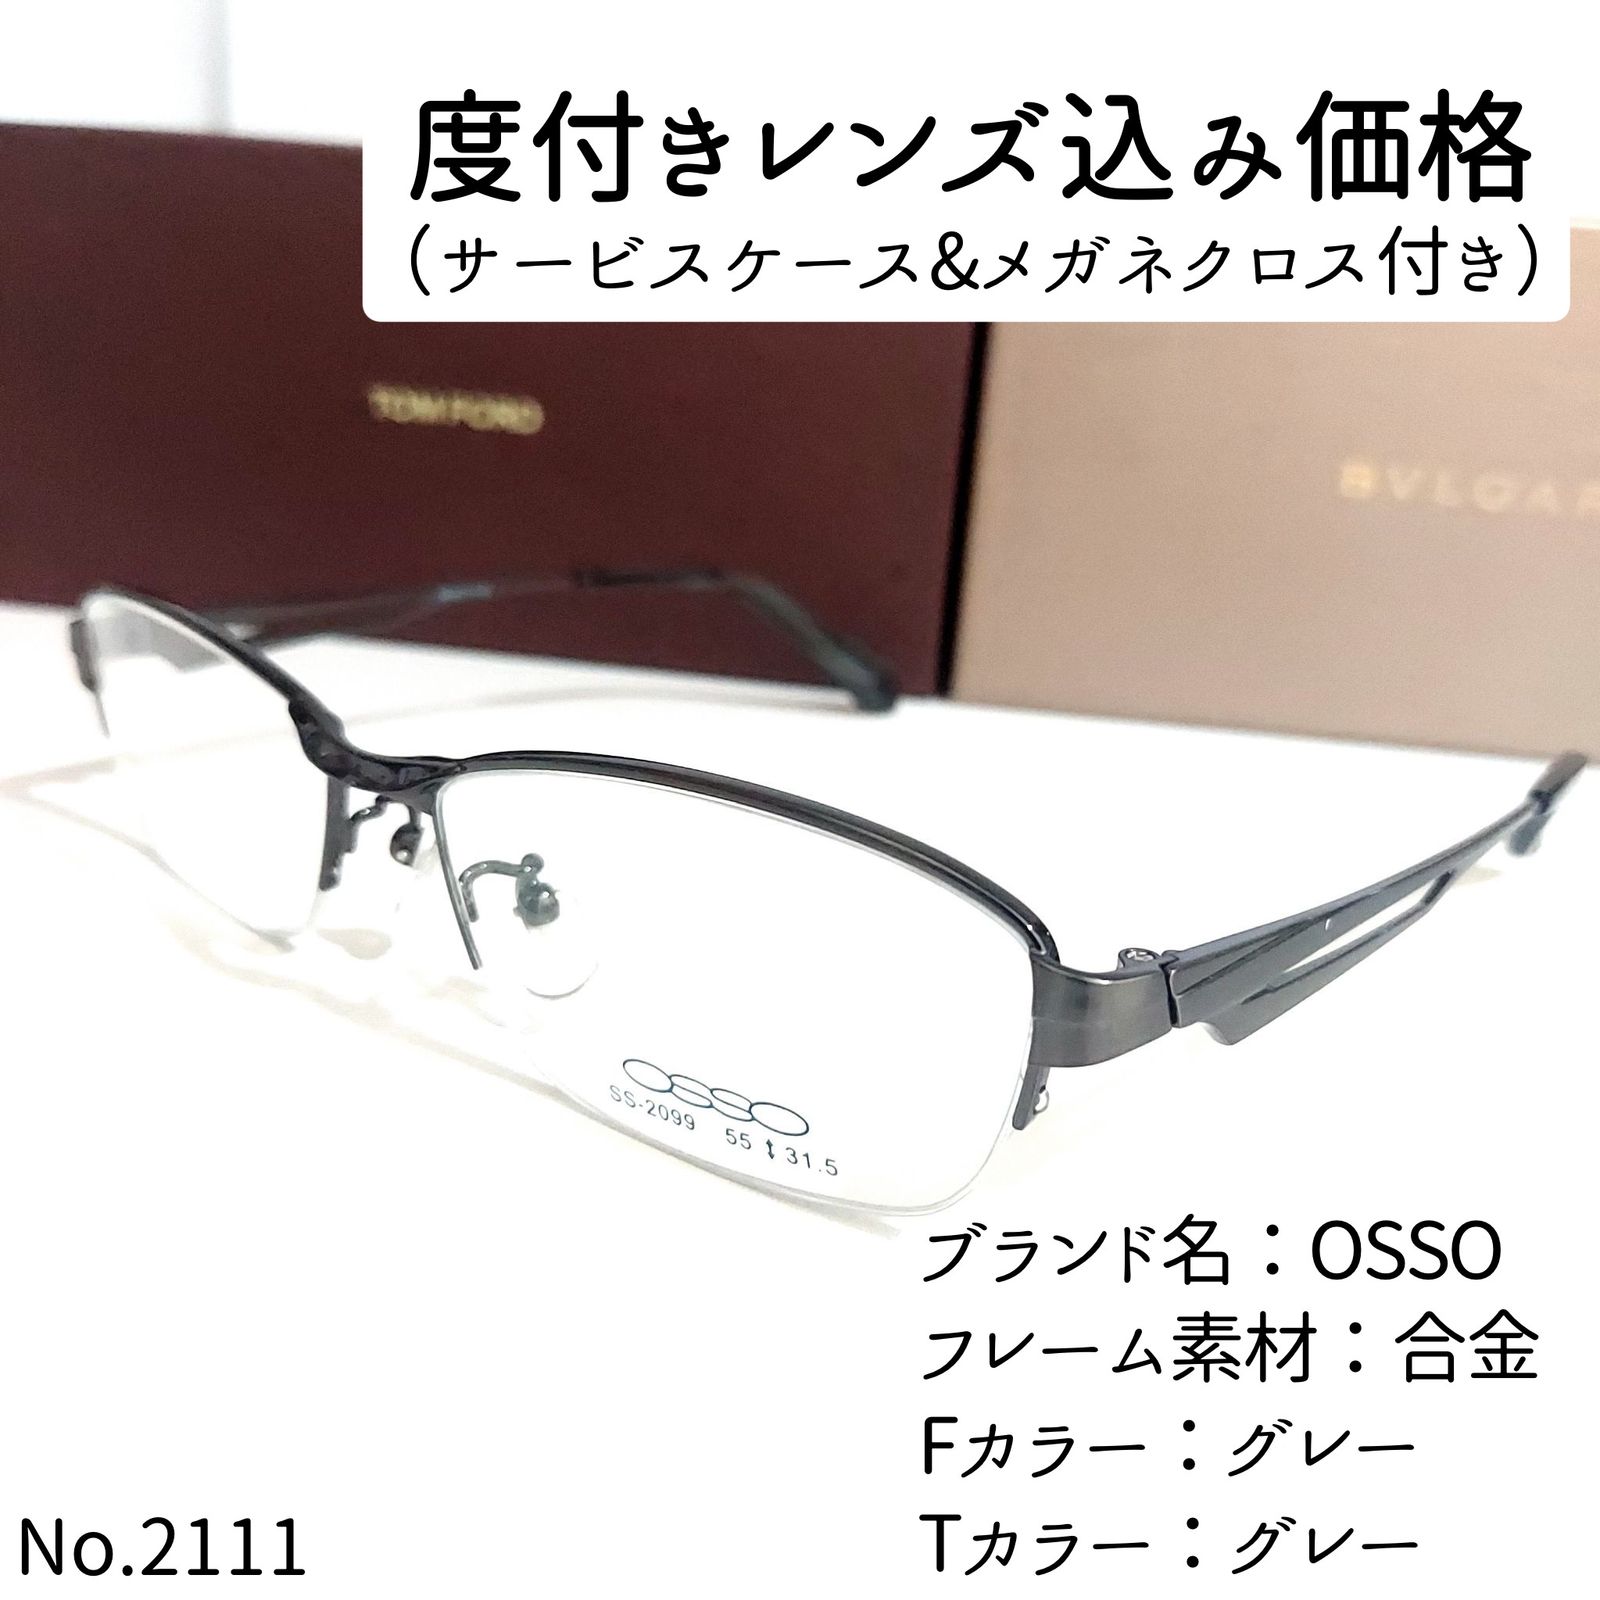 No.2111メガネ OSSO【度数入り込み価格】 - スッキリ生活専門店 - メルカリ